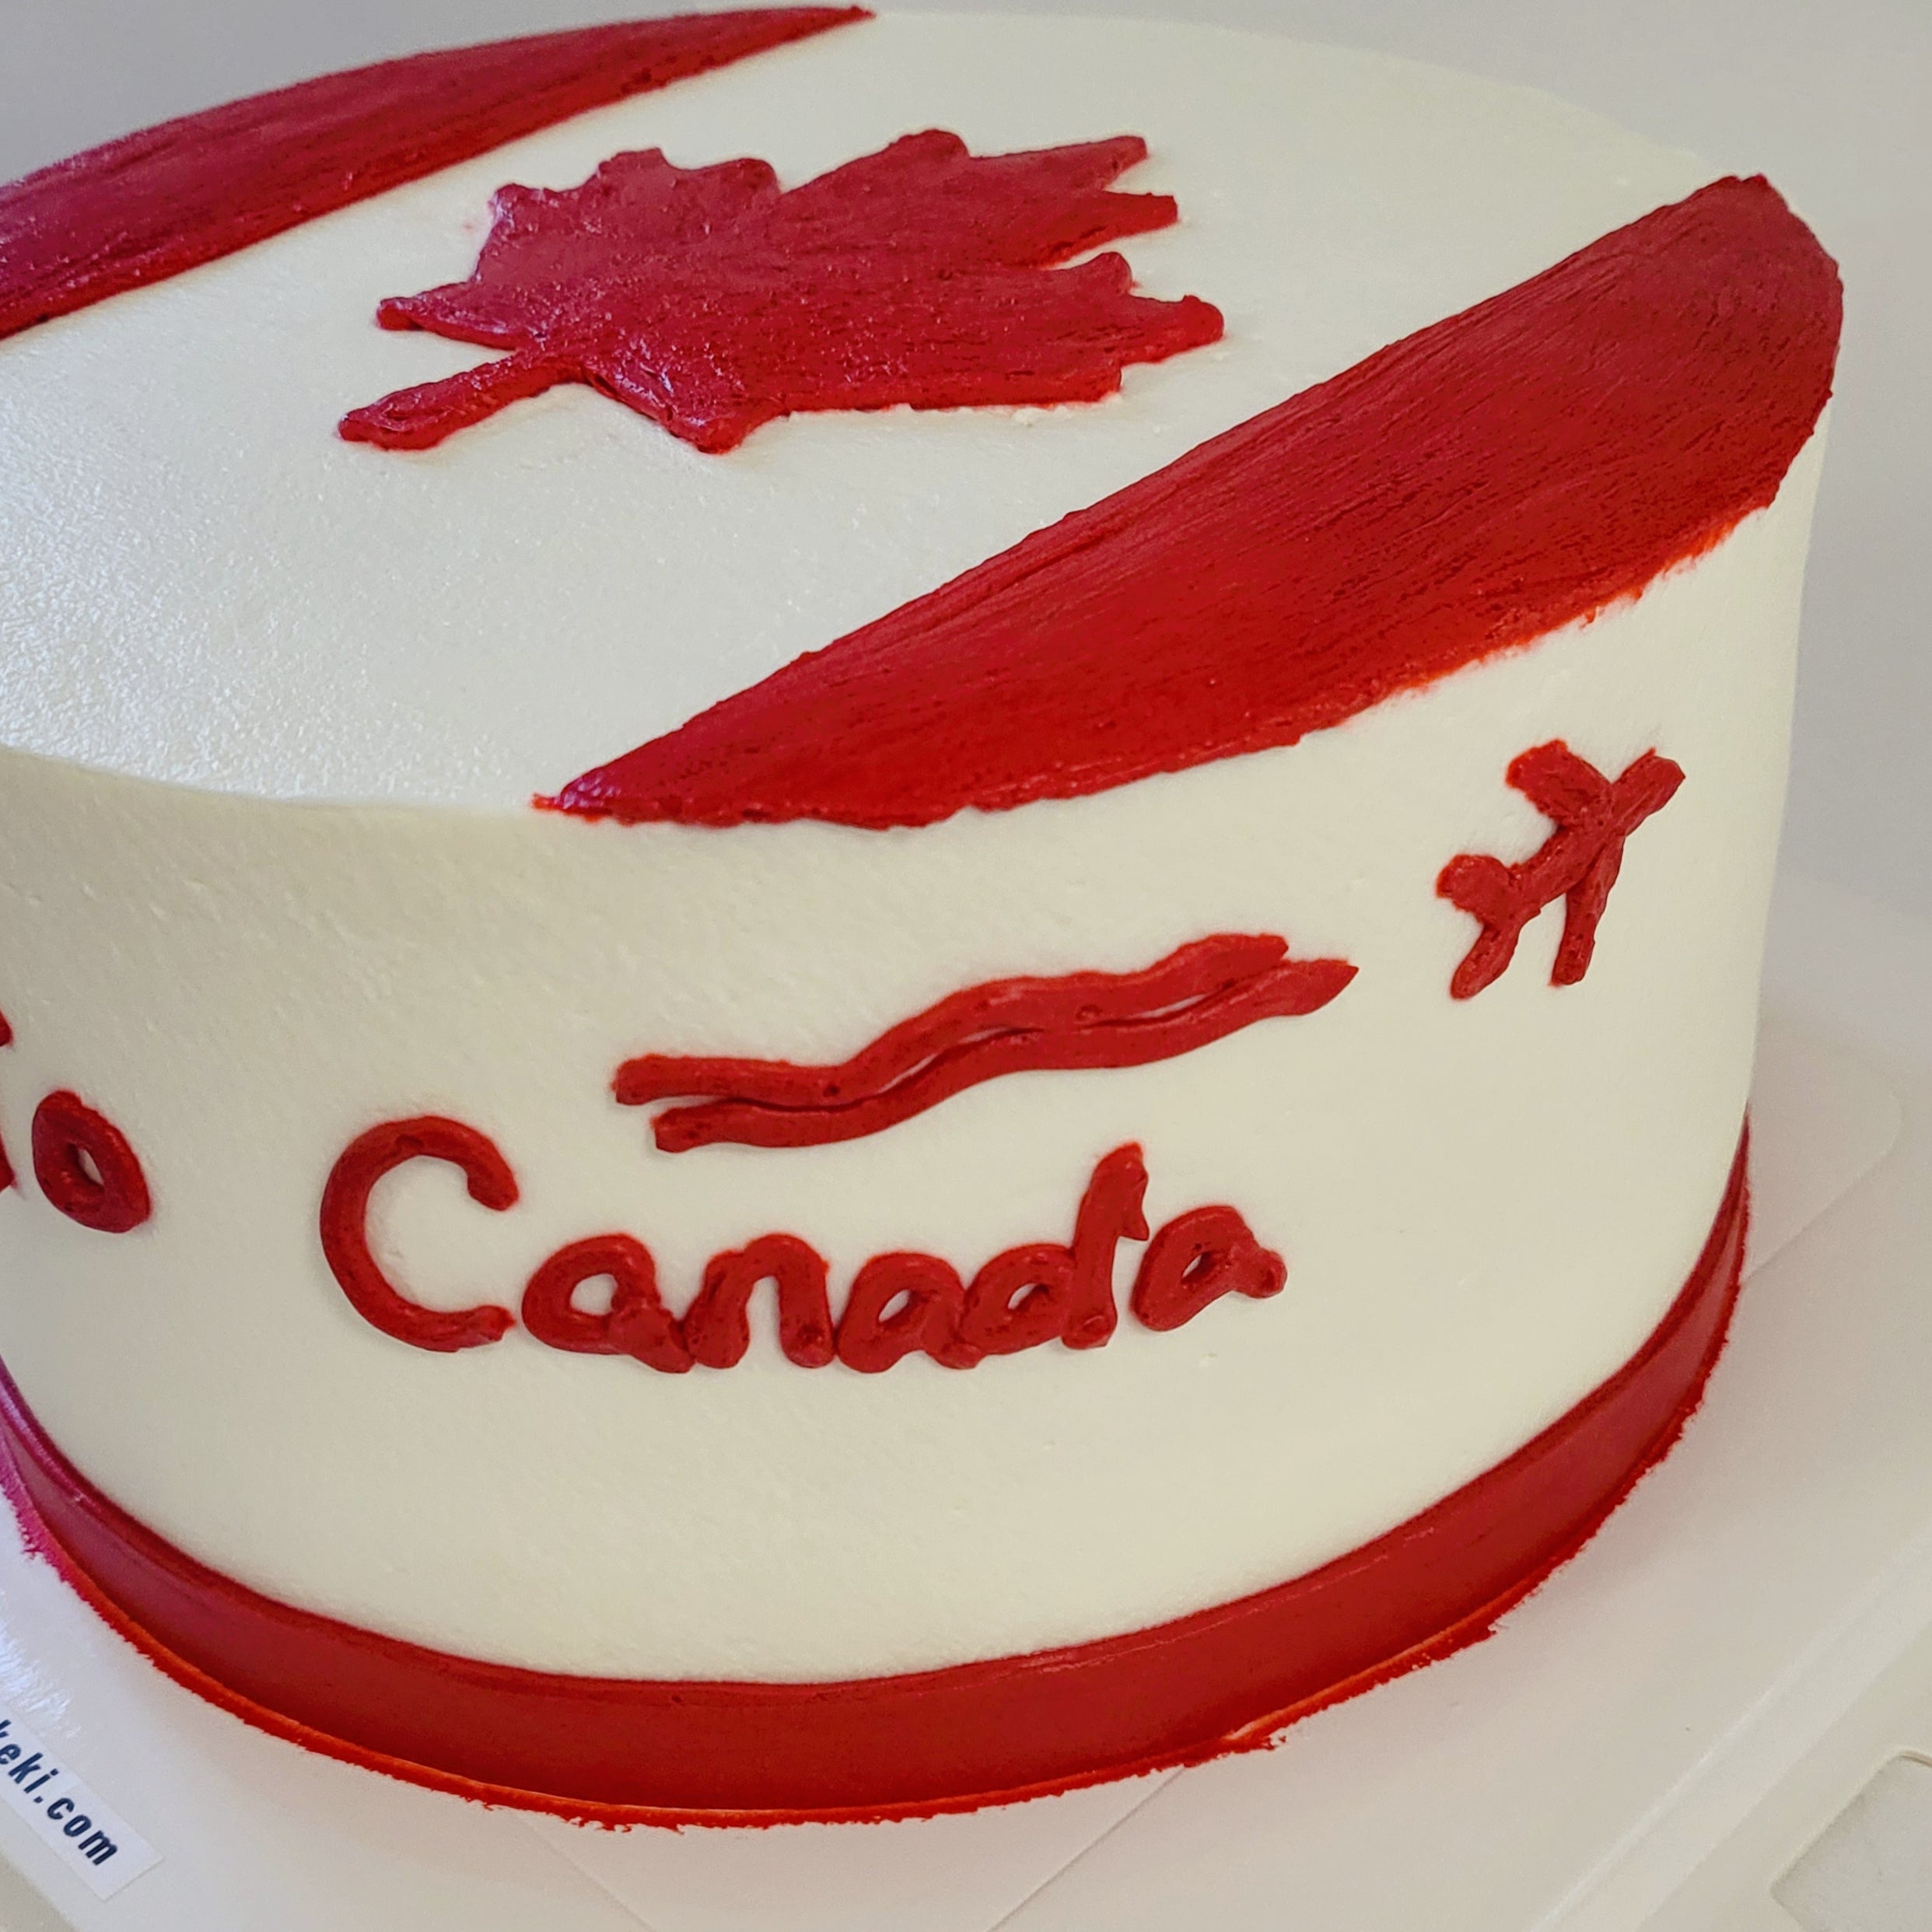 Meet talented creators of Croatian-themed cakes in Canada and Australia |  Croatia Week